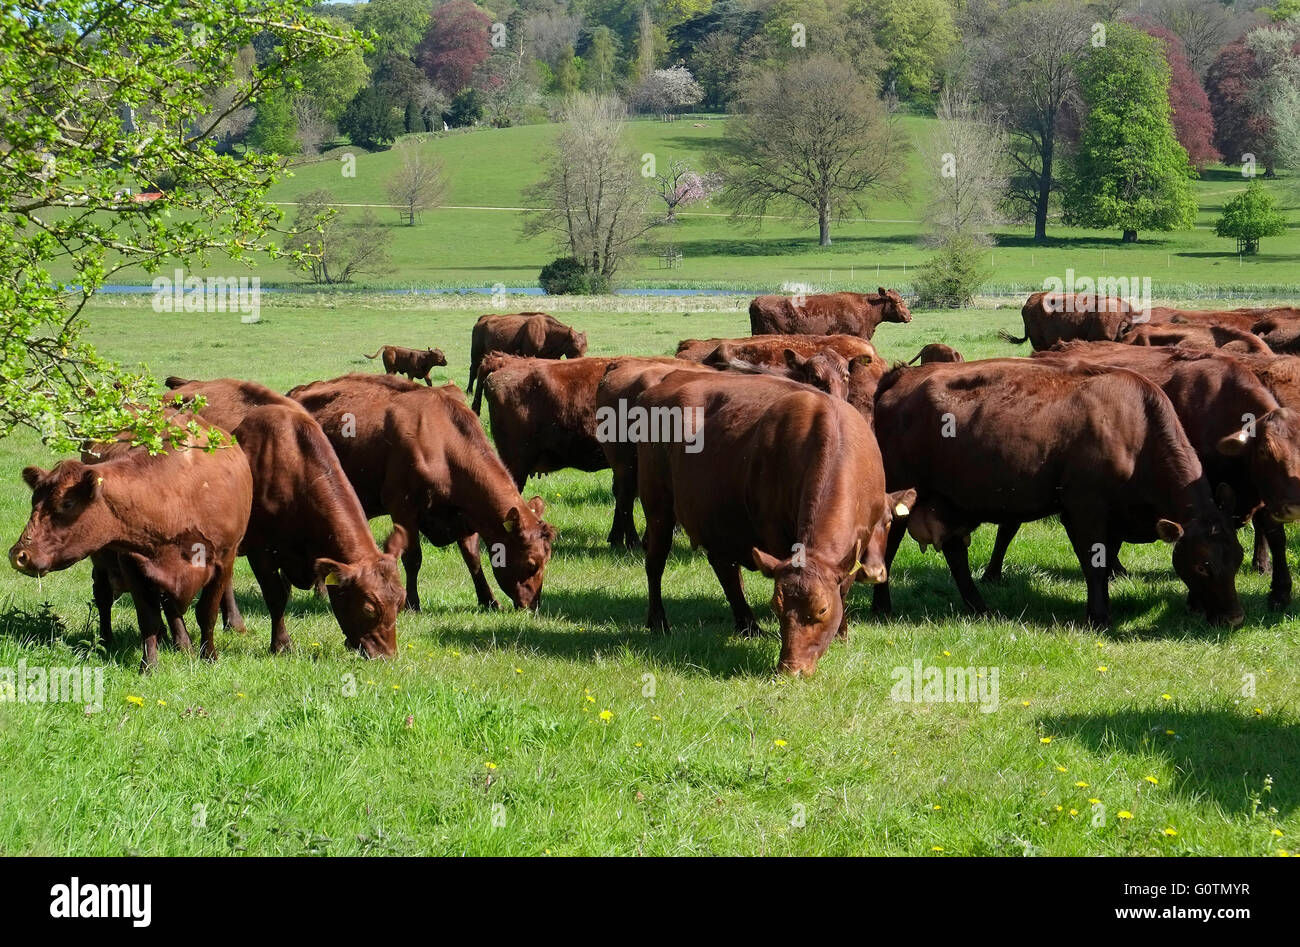 Les bovins laitiers red poll sur l'bayfield hall estate, North Norfolk, Angleterre Banque D'Images